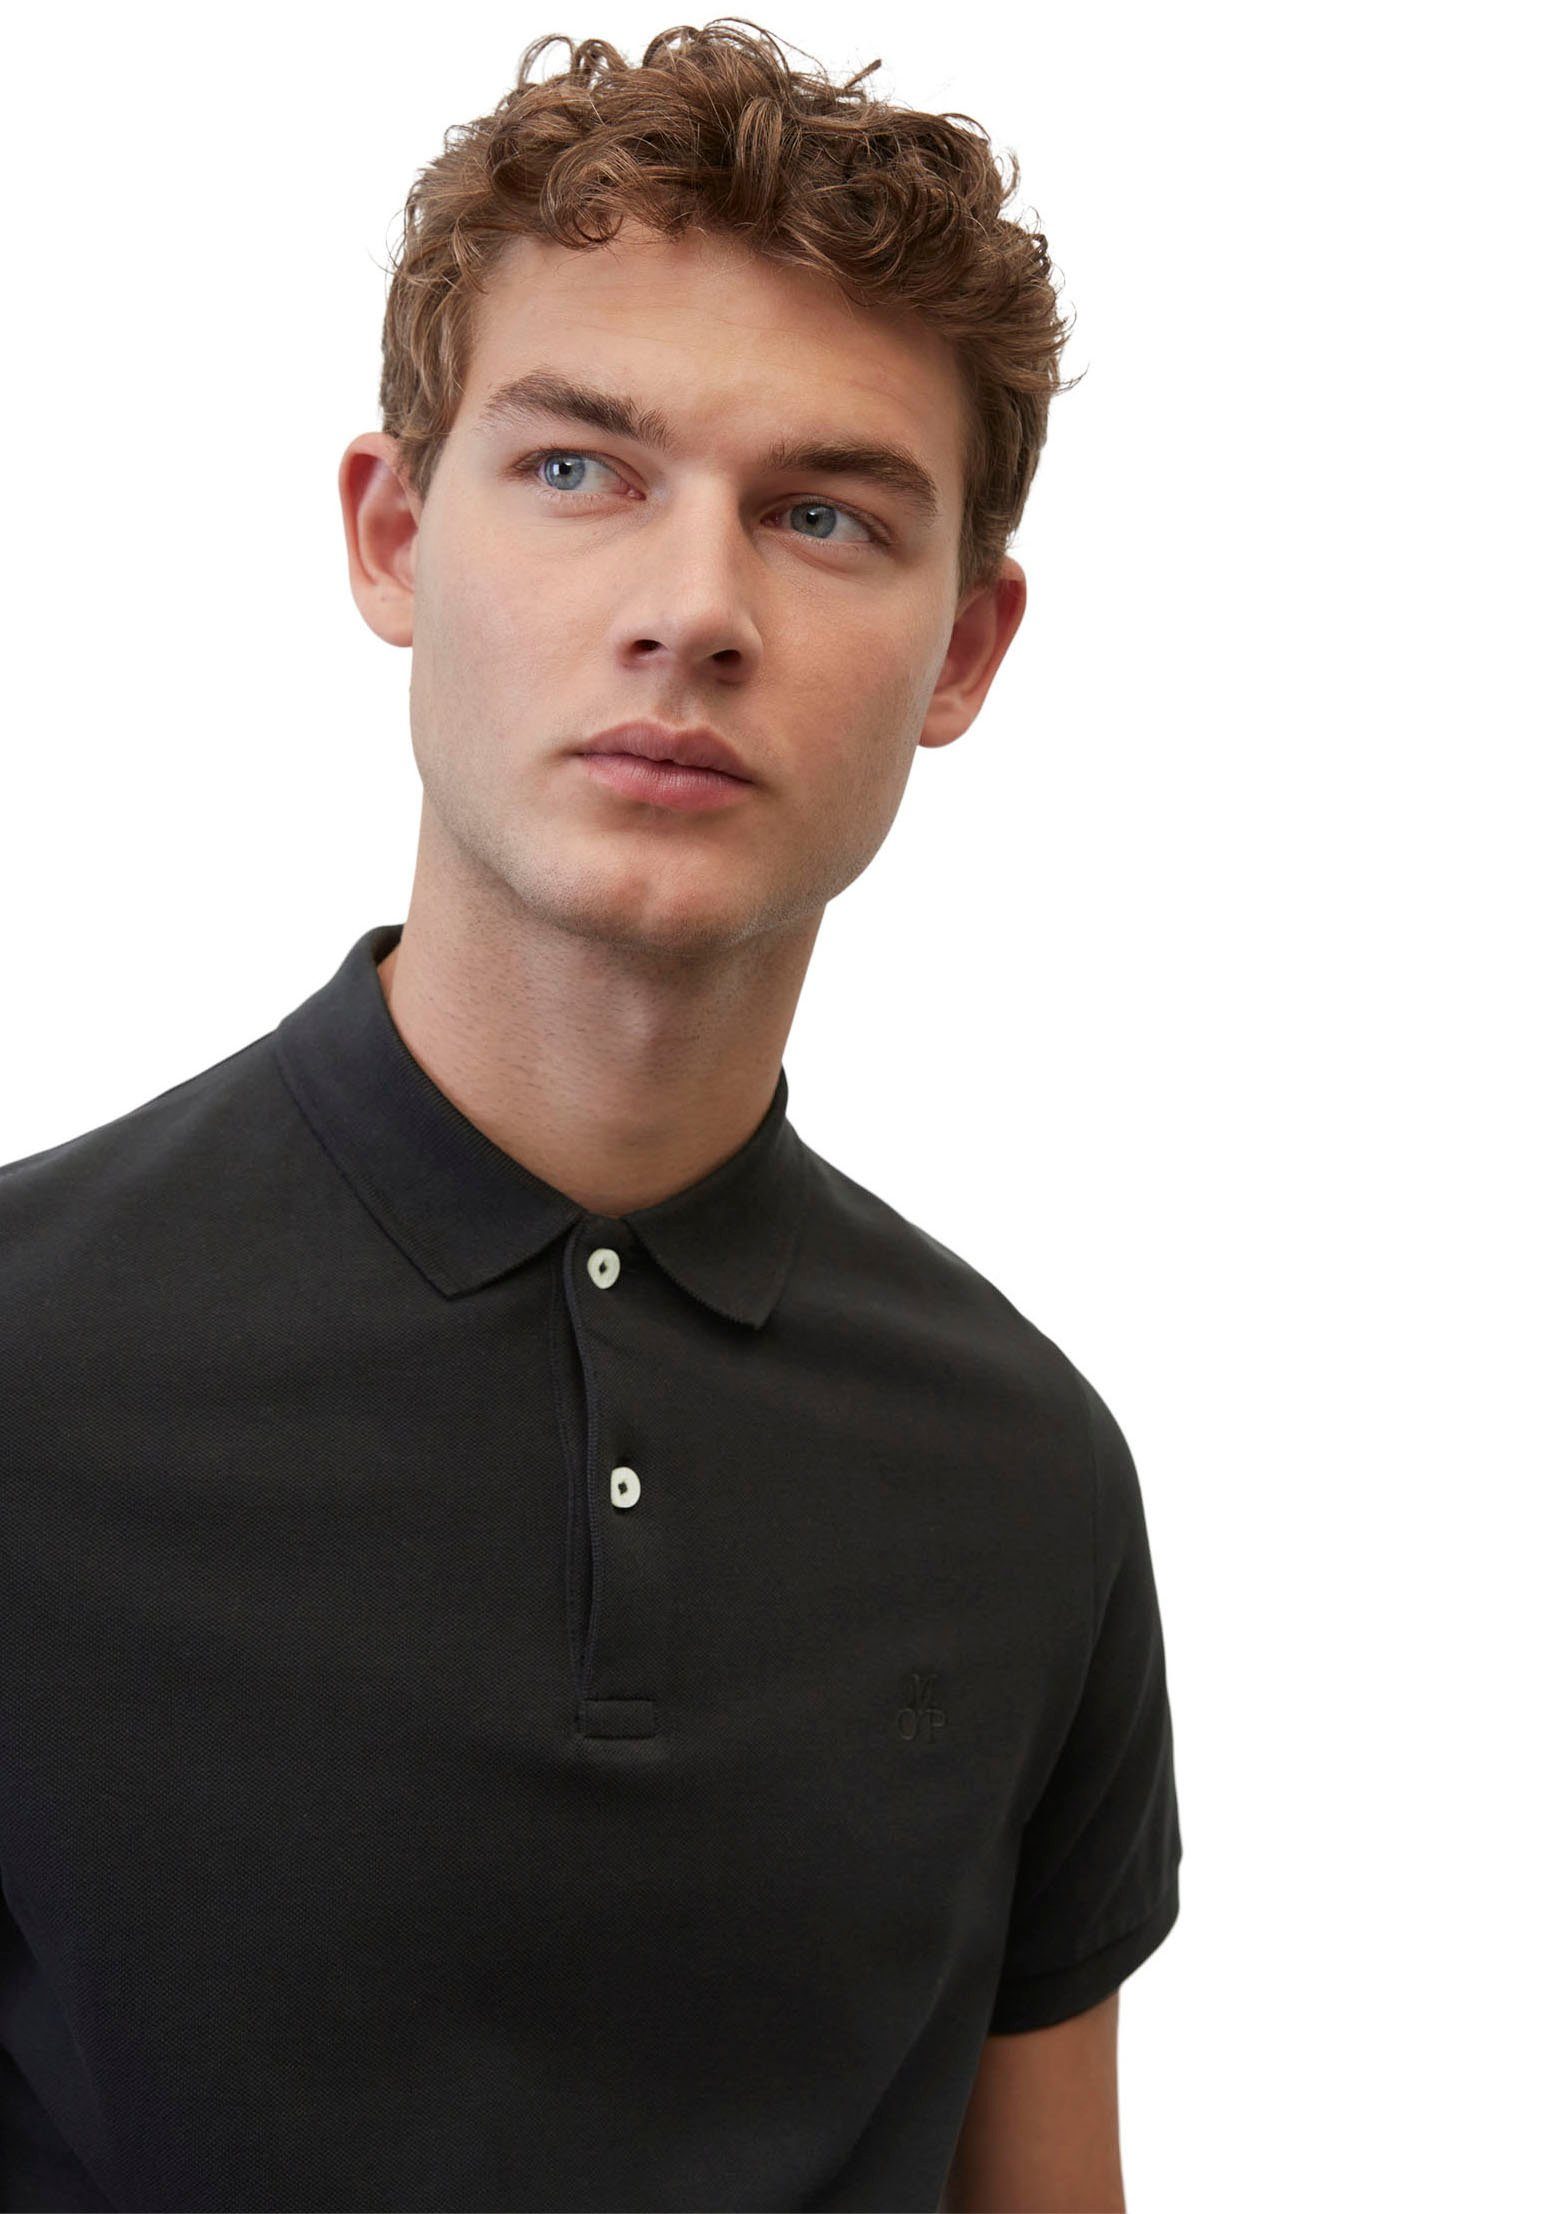 Marc O'Polo Poloshirt im schwarz Look klassischen